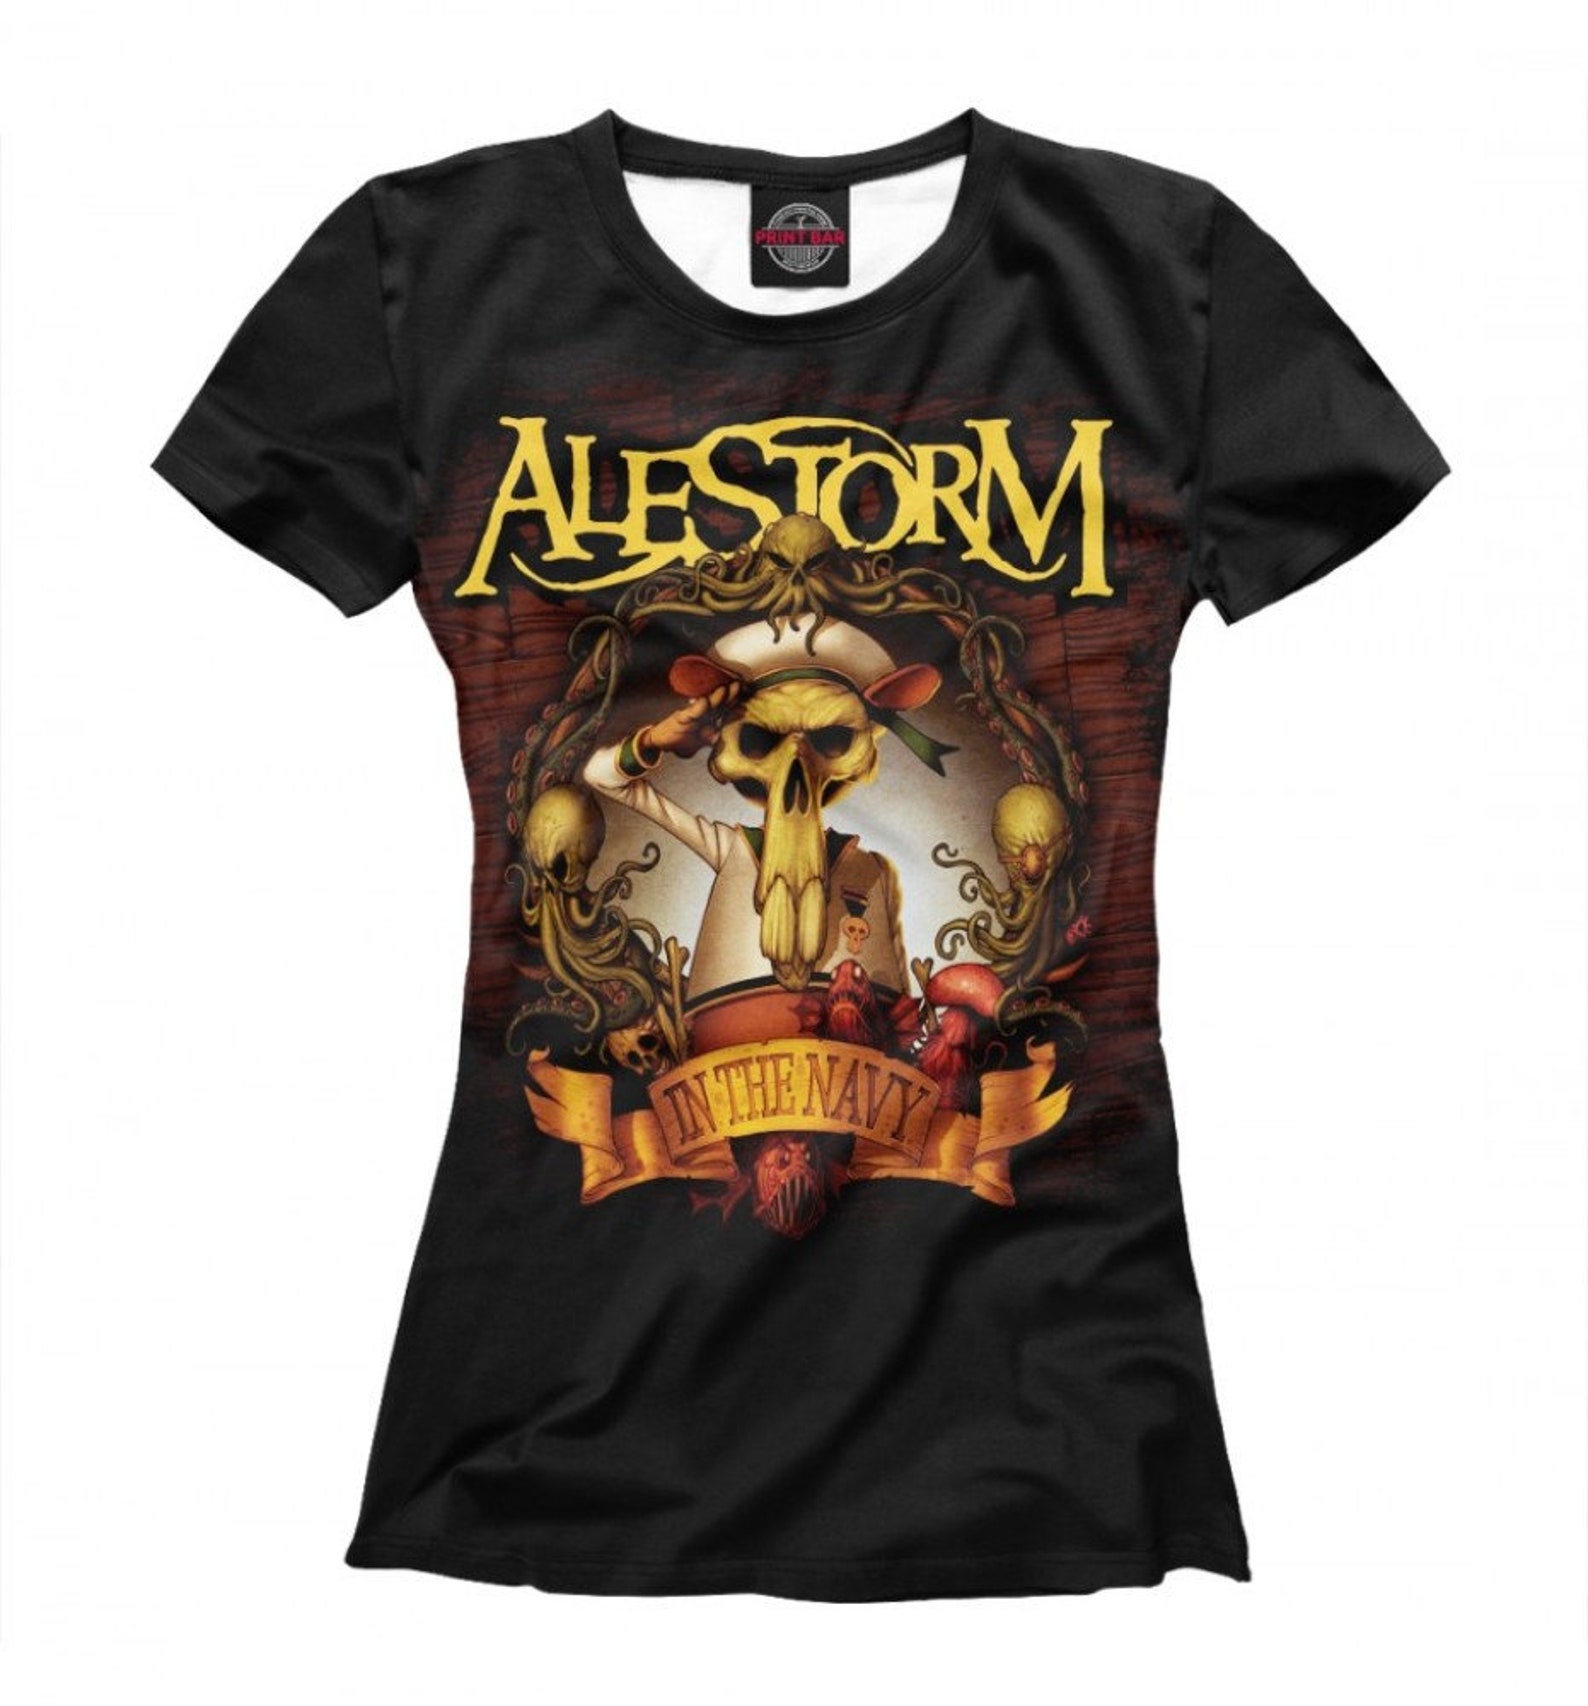 Alestorm In The Navy T-Shirt Premium Quality Shirt Men's | Etsy